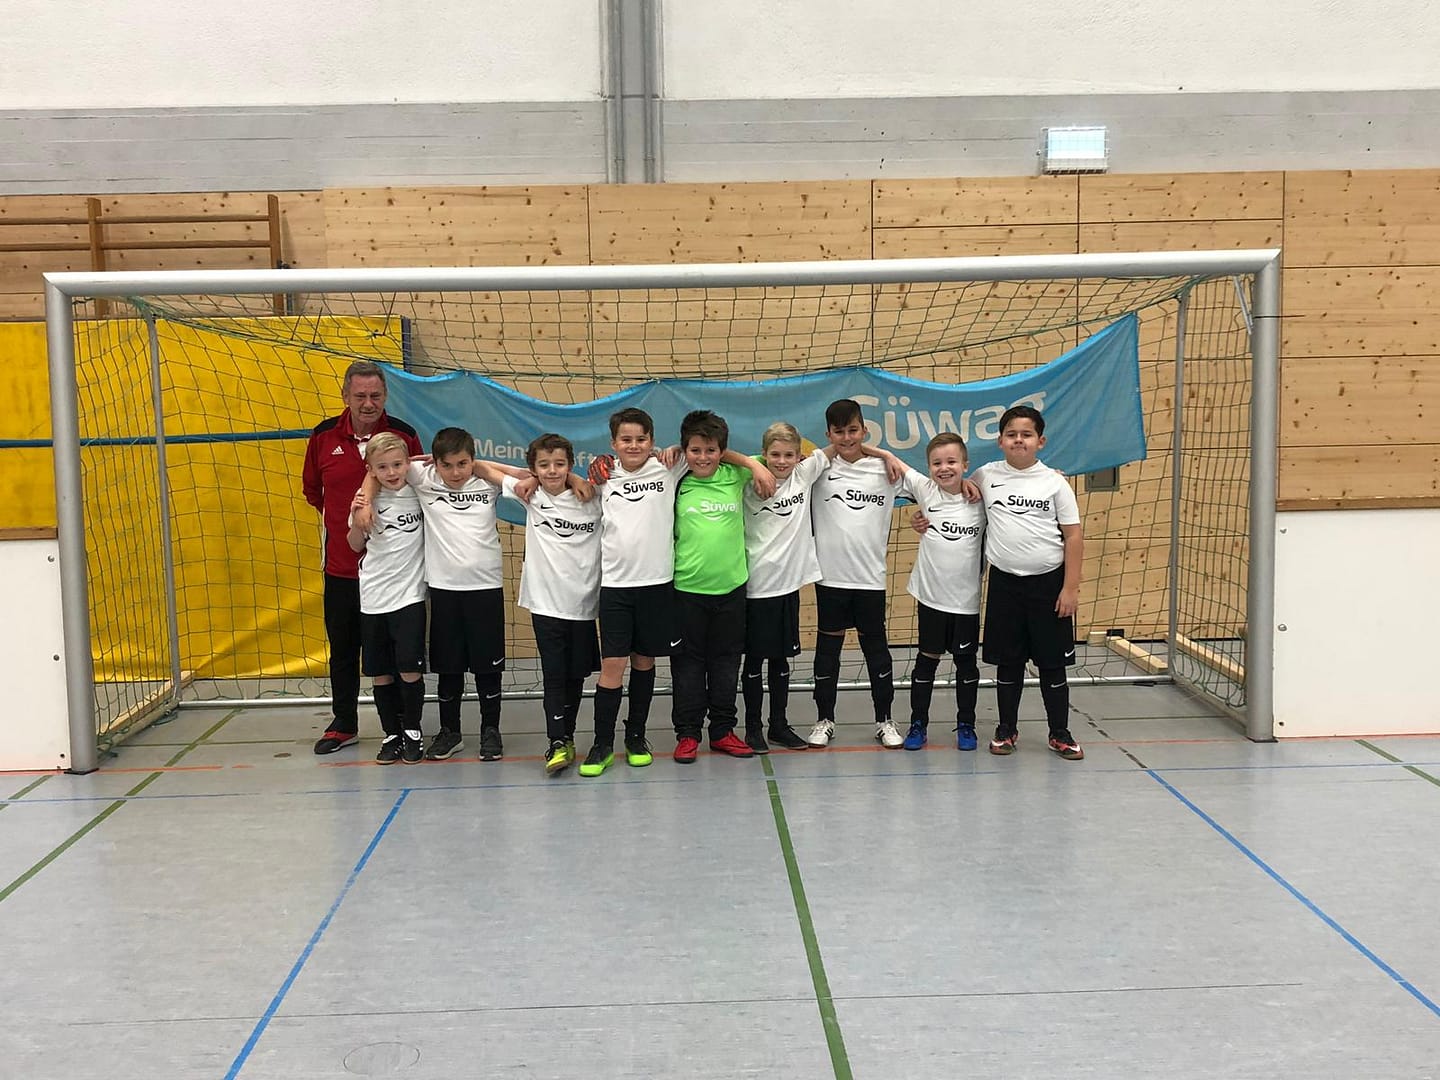 Süwa Hallencup 2019 - E-Junioren - VfB Linz